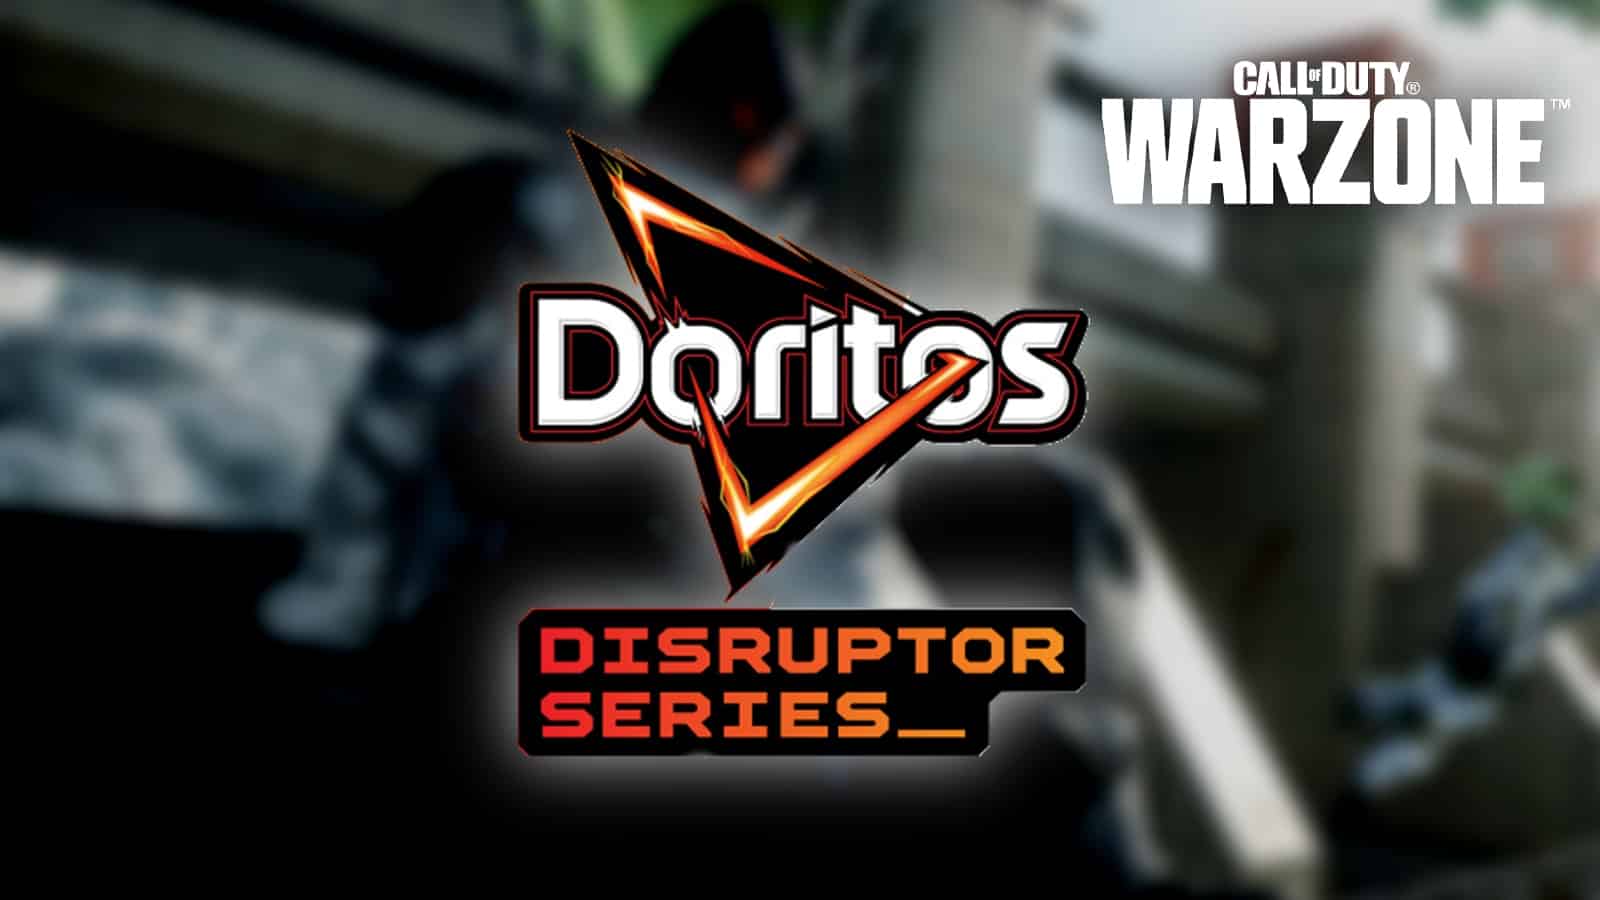 warzone doritos disruptor series warzone tournament